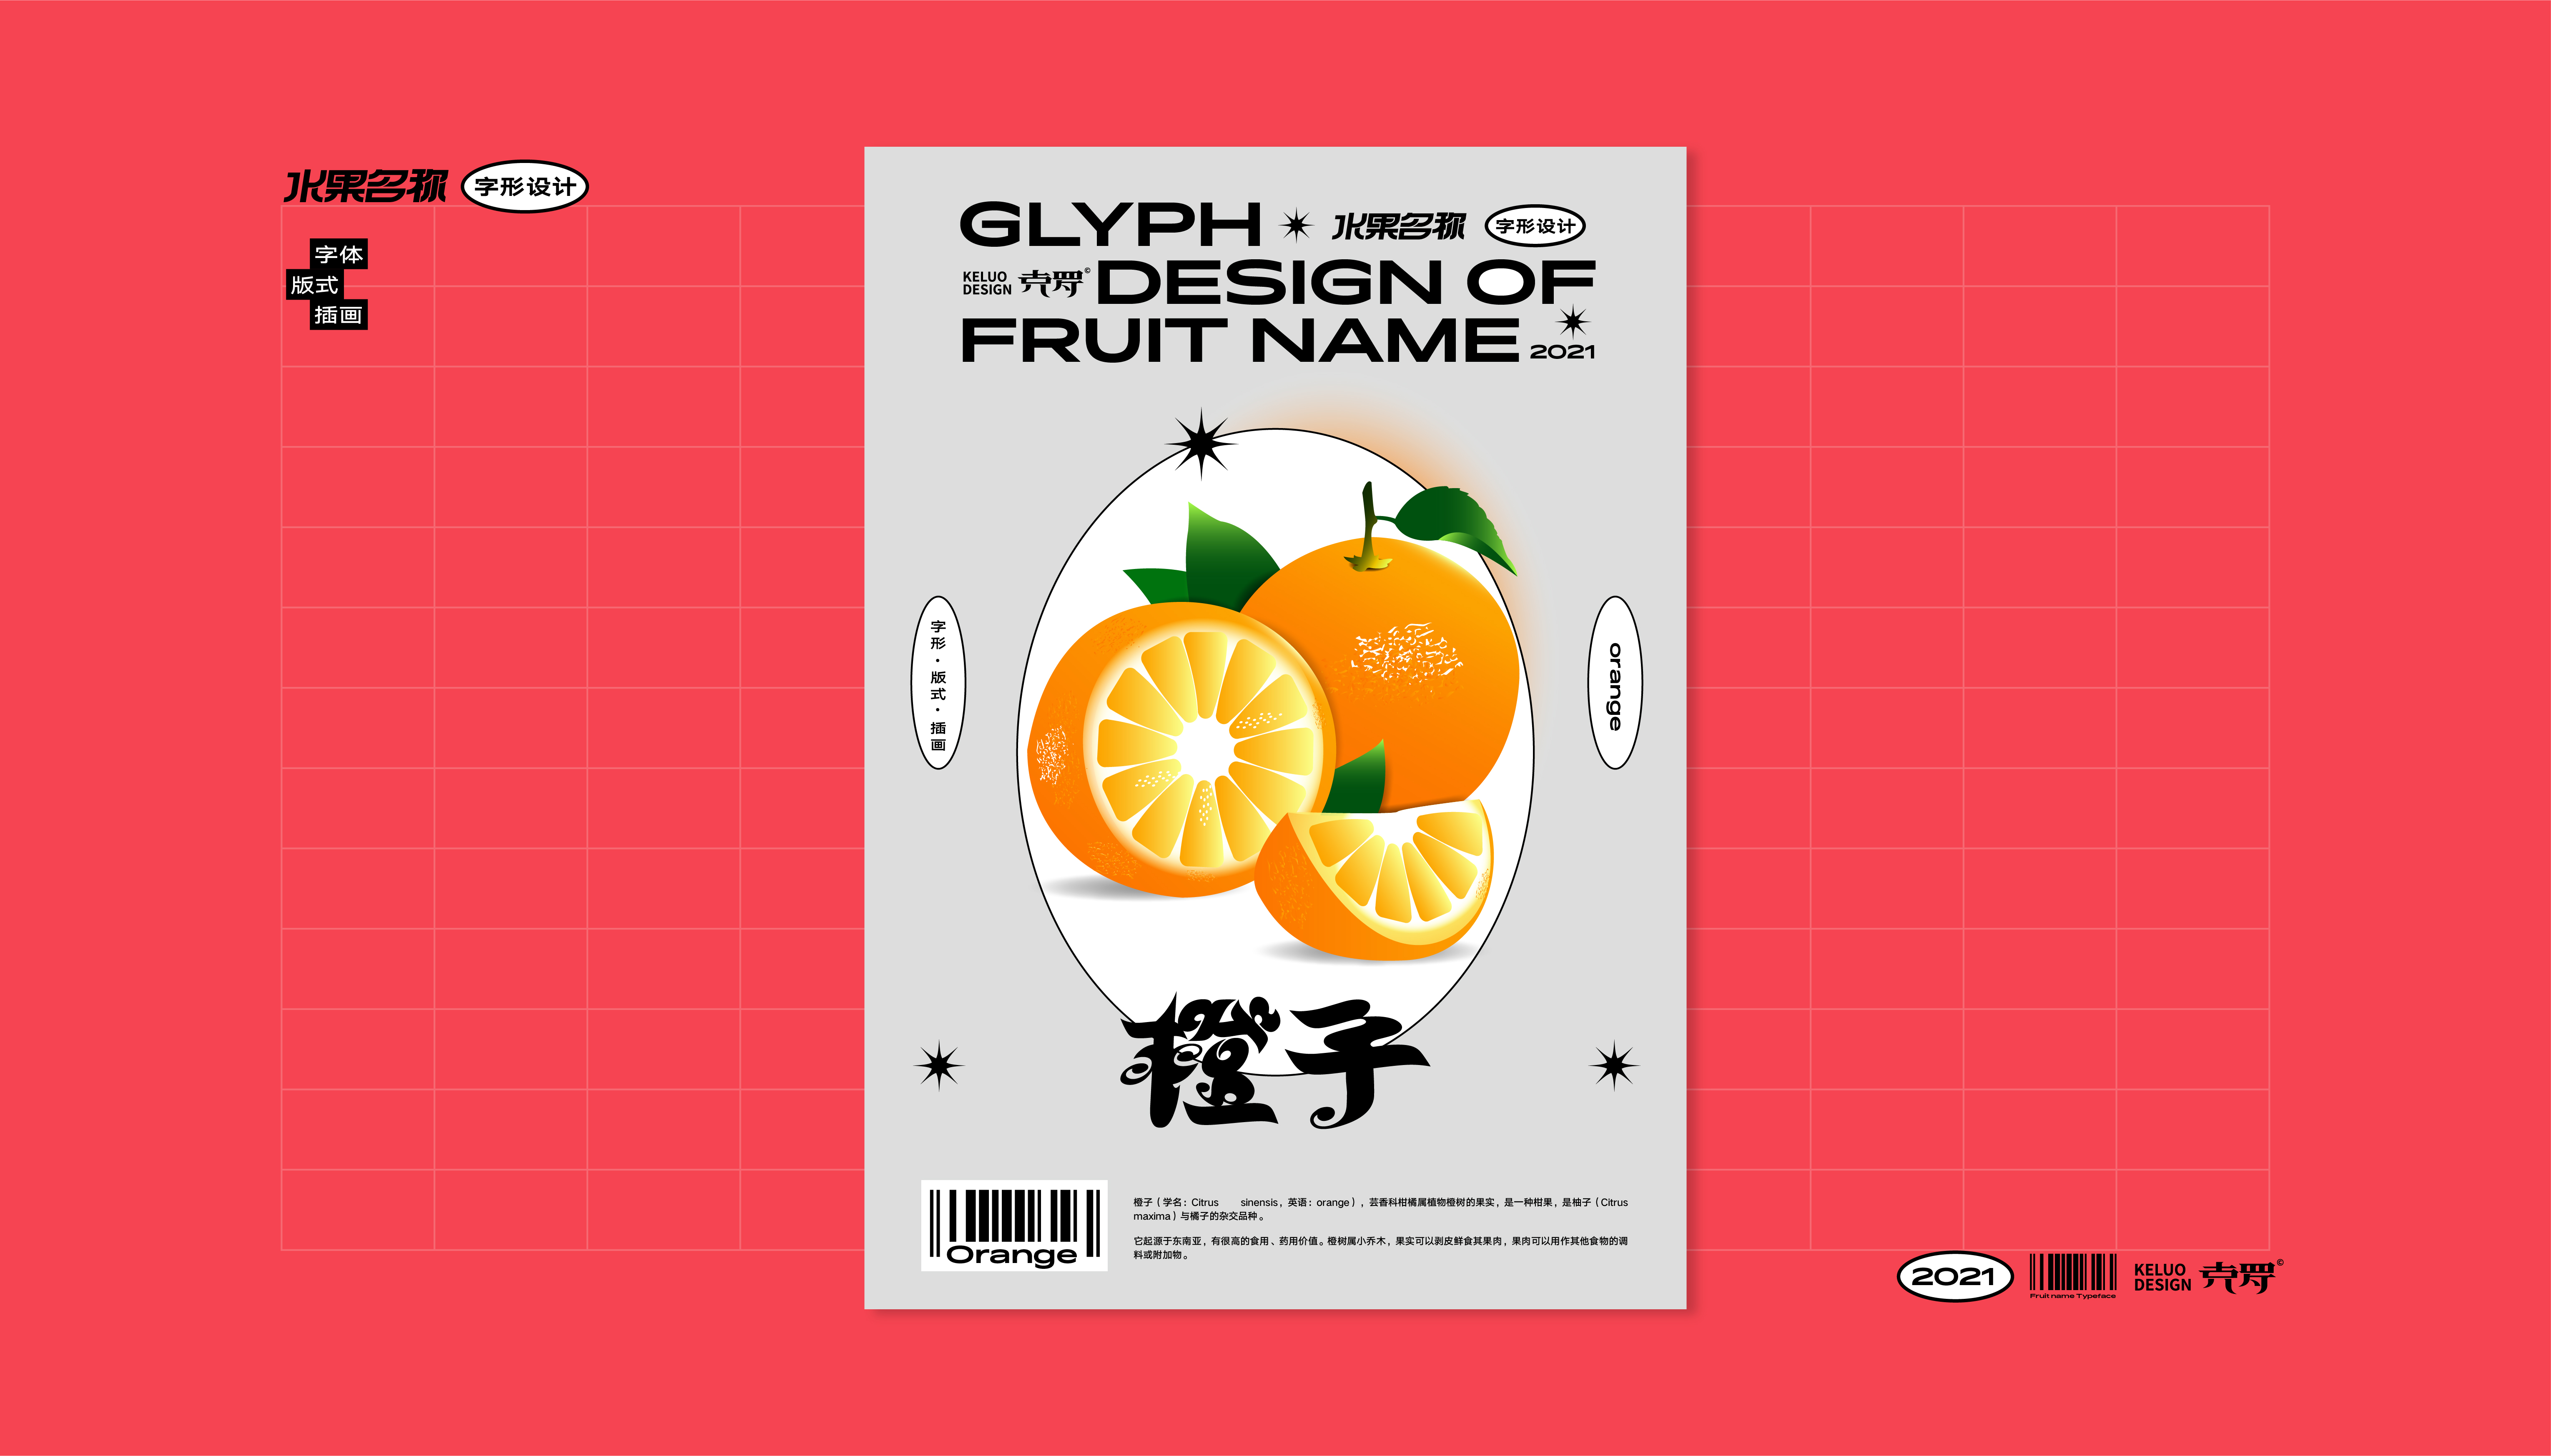 Font design of fruit name series poster